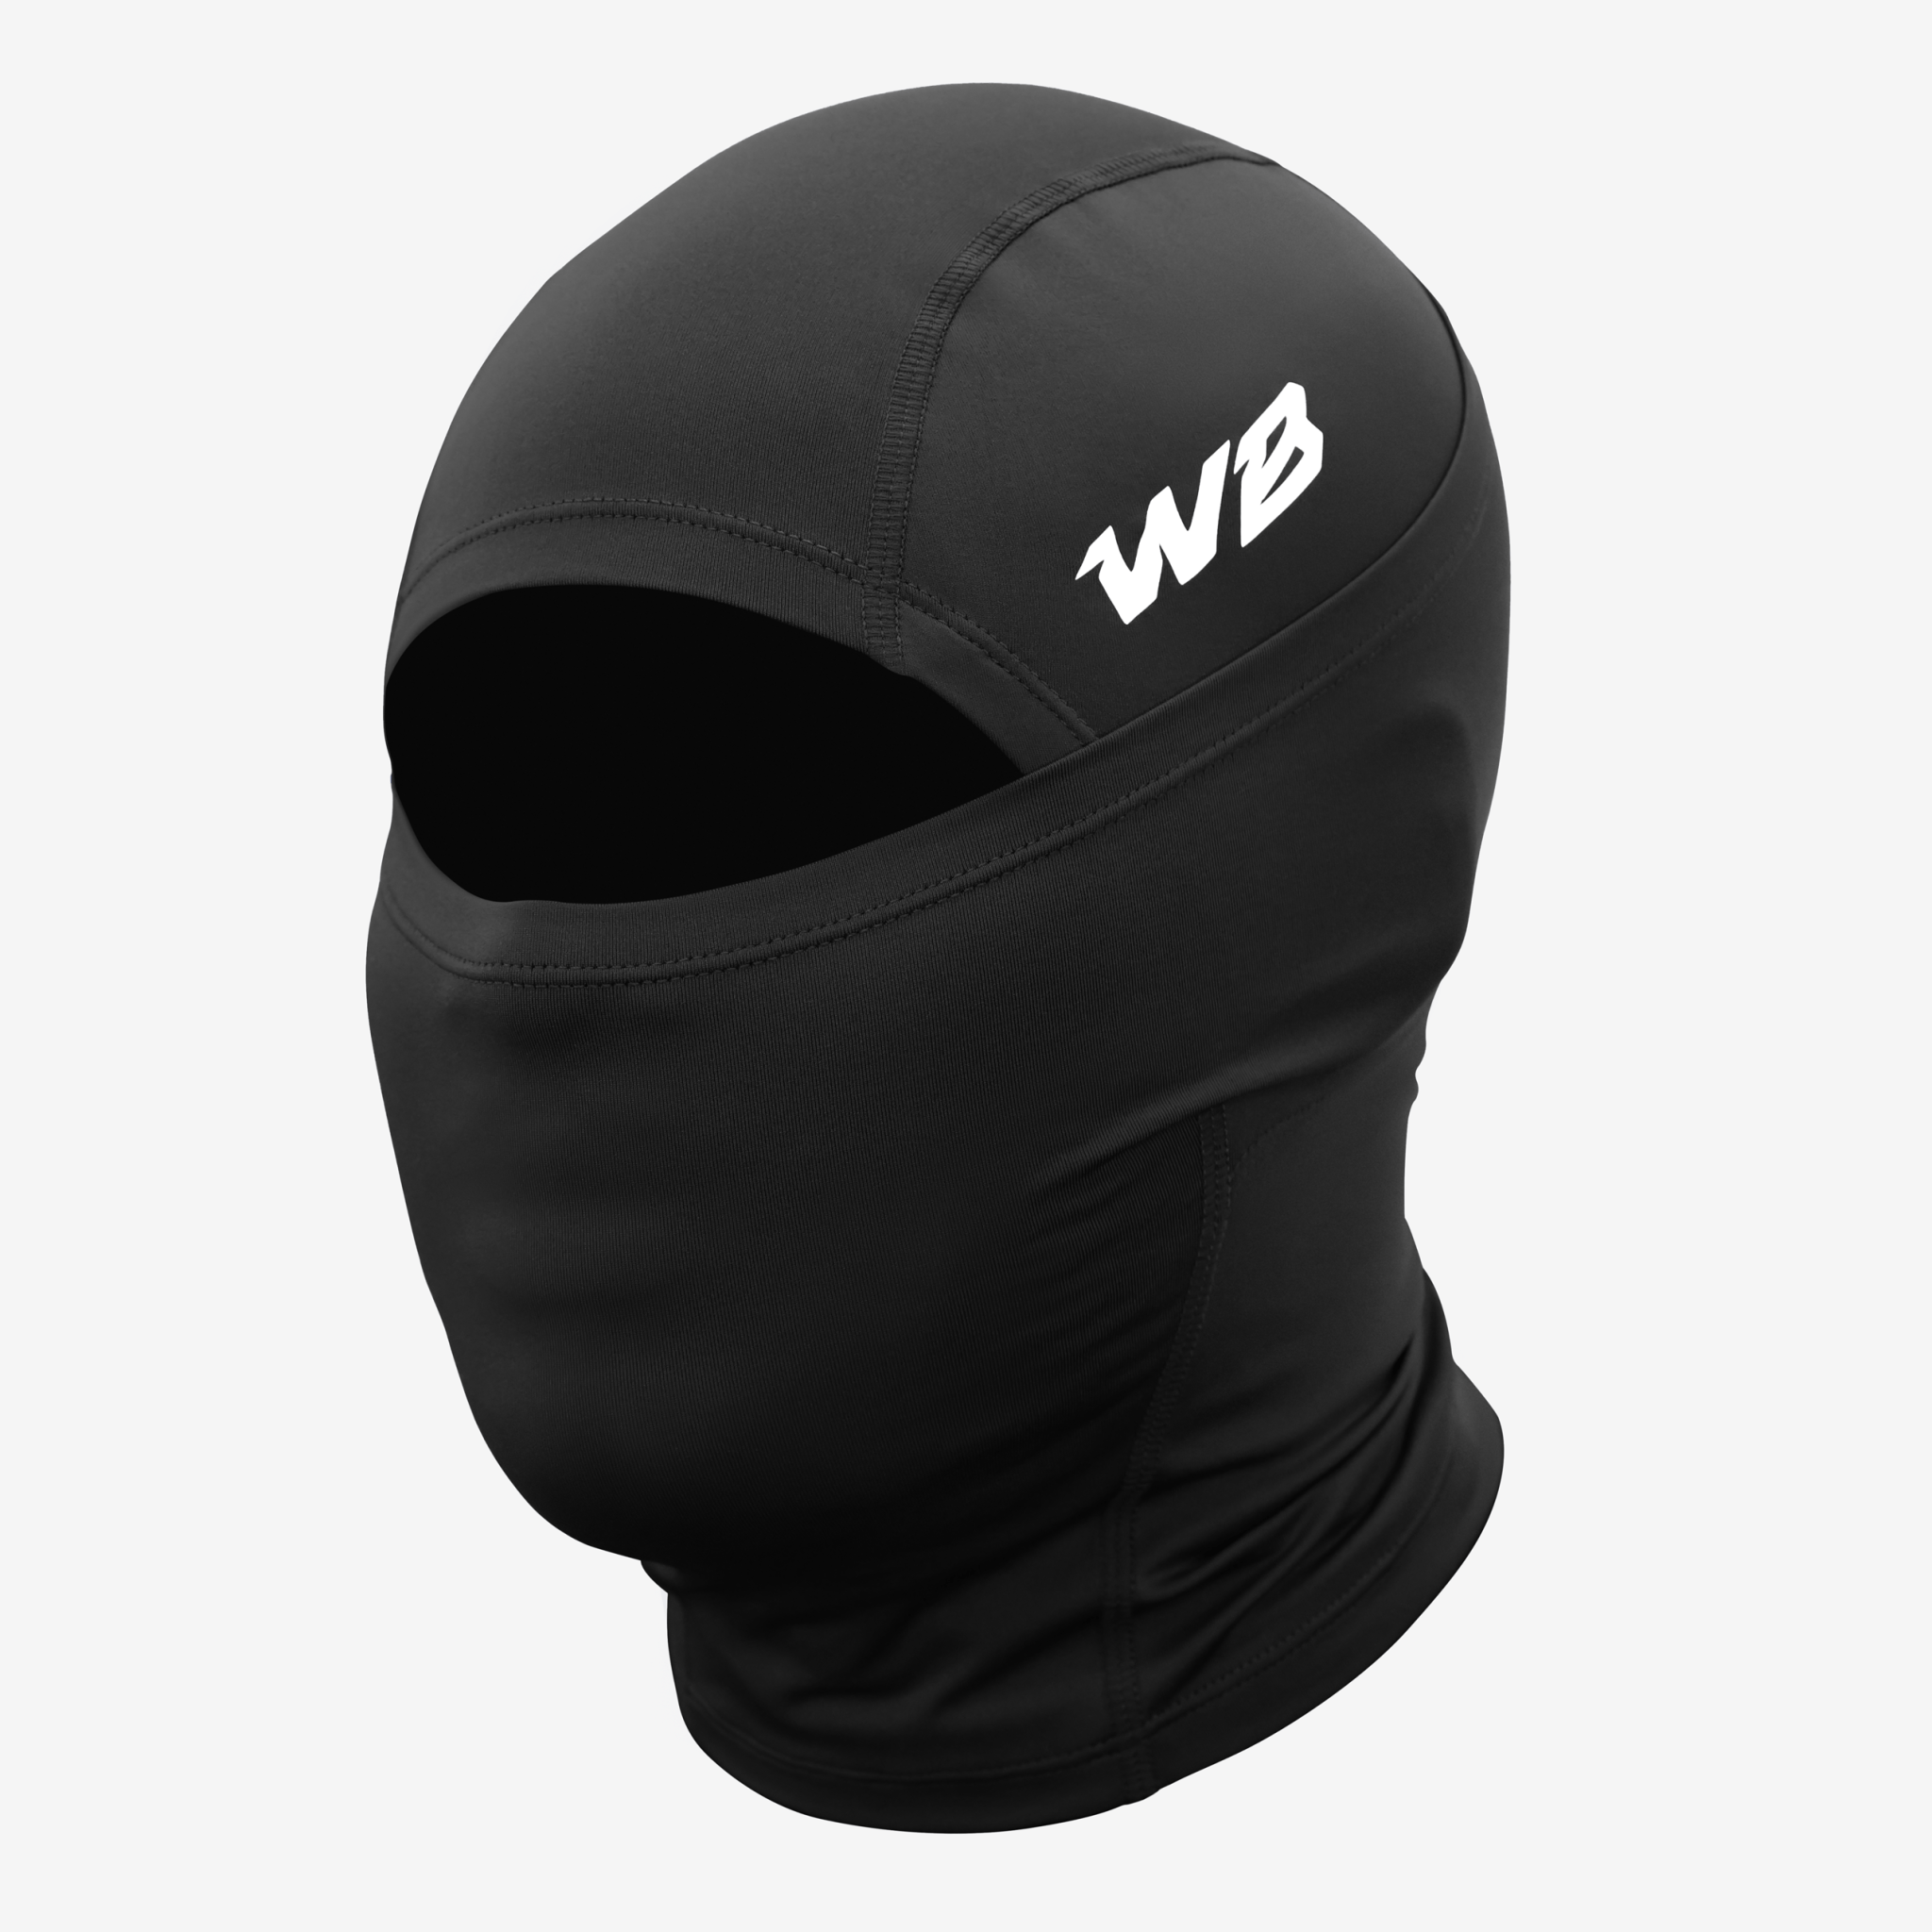 We Ball Sports Adult Ski Mask, Hyperwarm Hood Balaclava  Full Face,  Lightweight, Windproof & Moisture Wicking (Black)